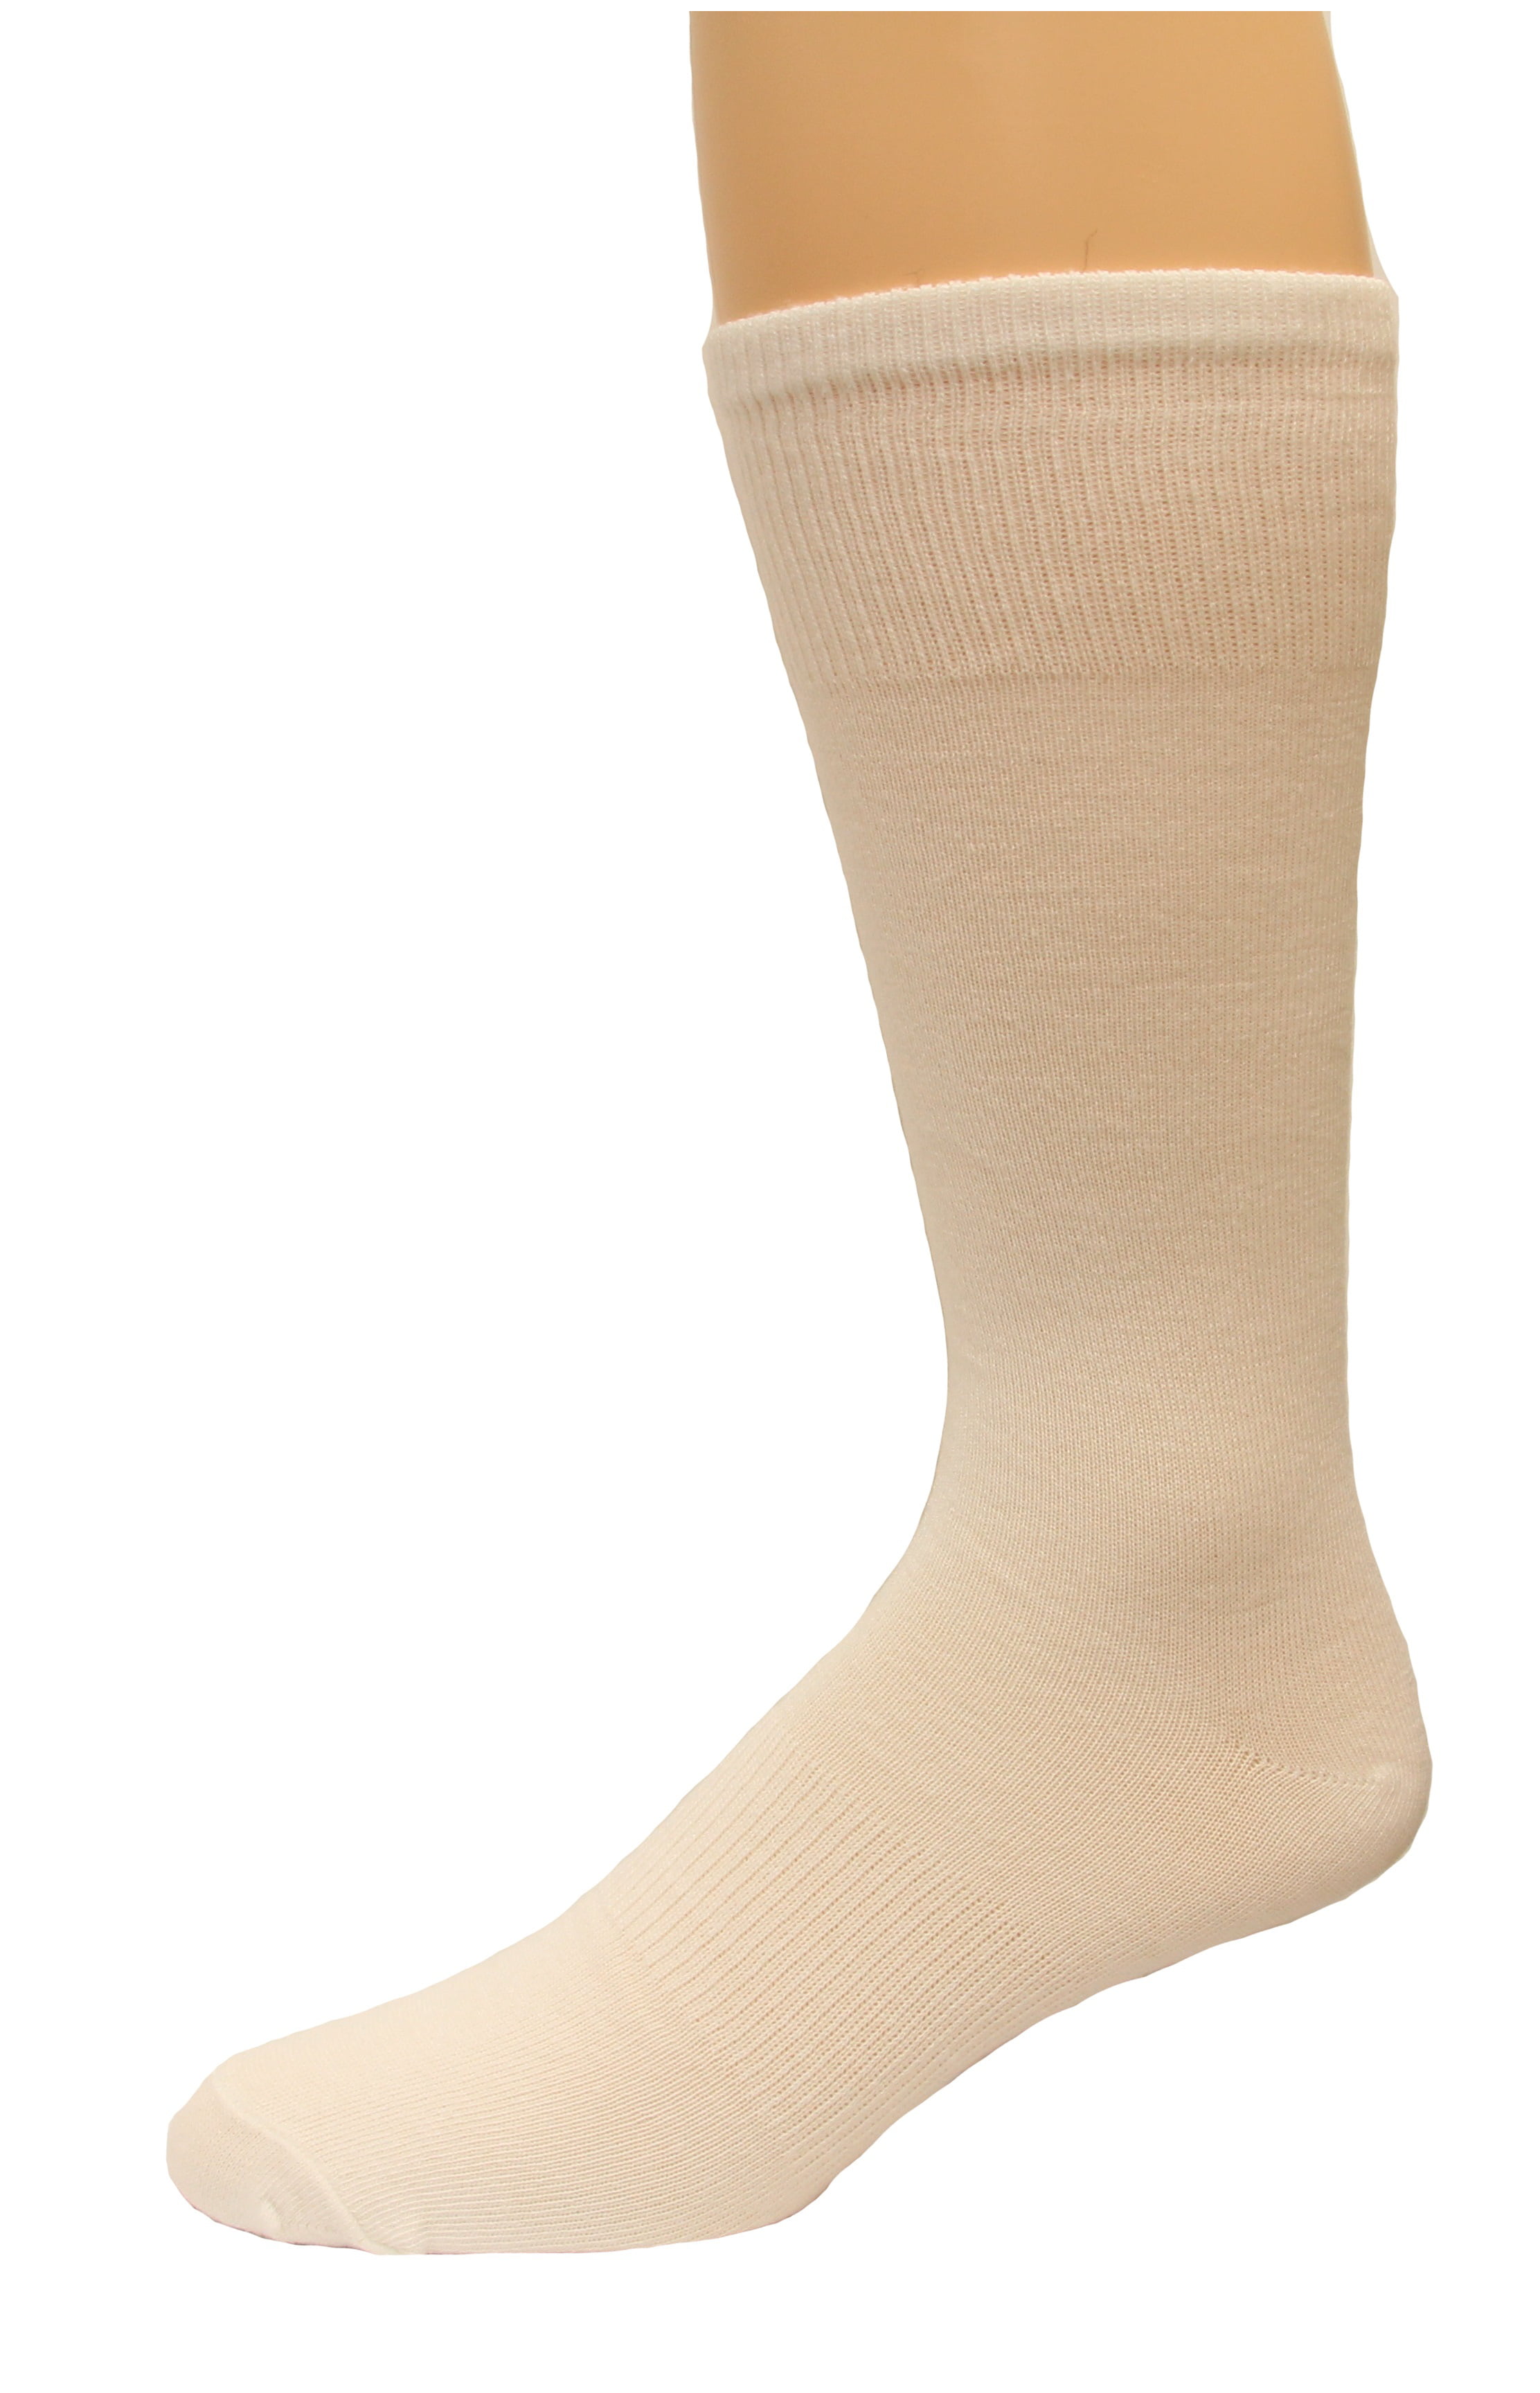 RealTree Men's Thermolite Liner Socks, 1 Pair, Large (M 9-13), White ...